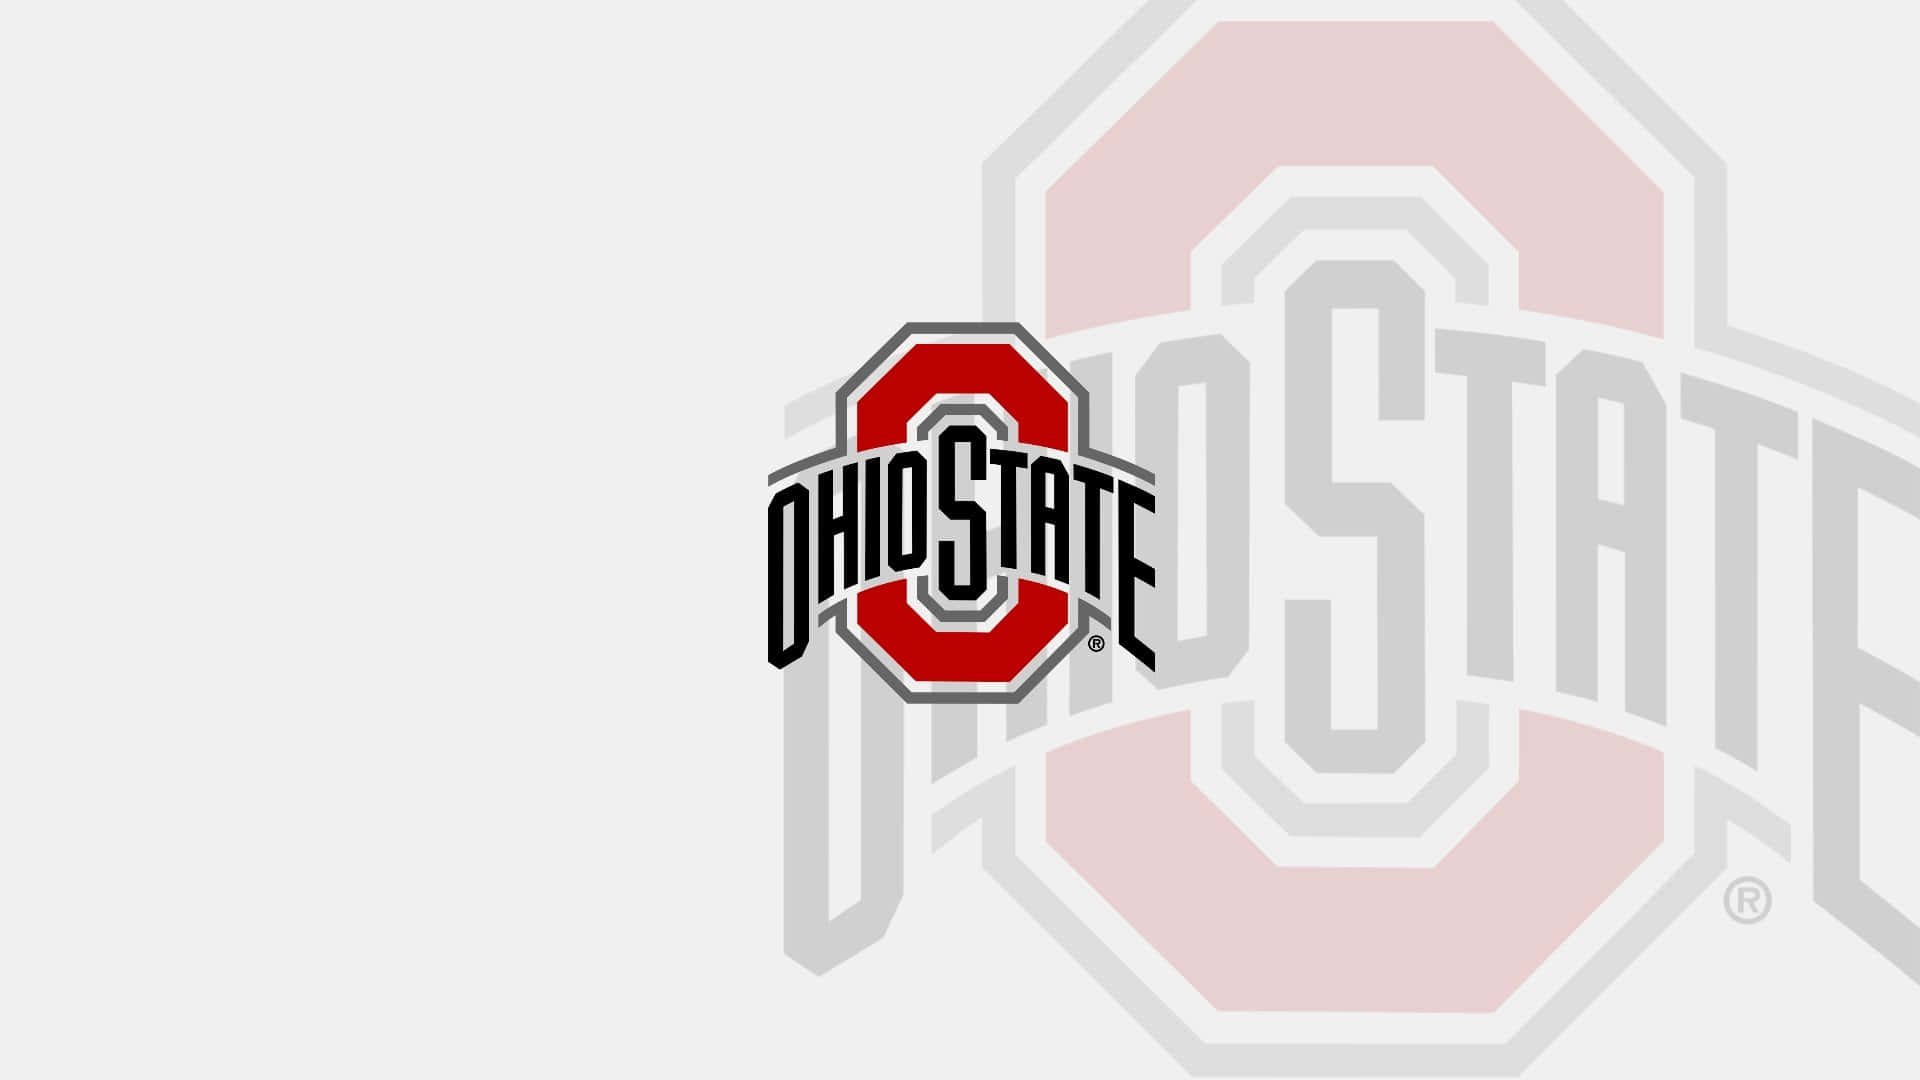 Logotipode Ohio State Desvanecido Y Ampliado. Fondo de pantalla